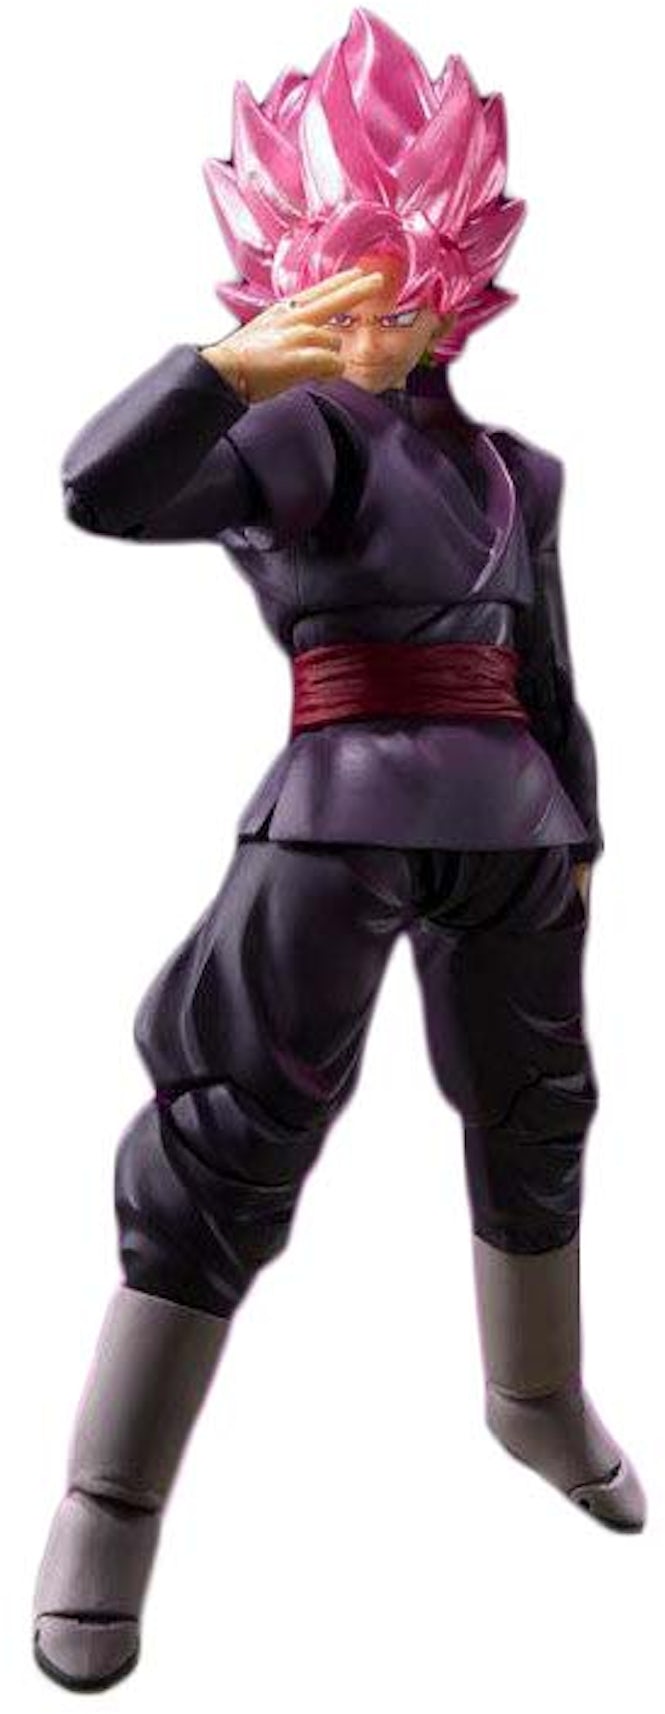 100% Original Bandai S.h.figuarts Shf Action Figure - Super Saiyan